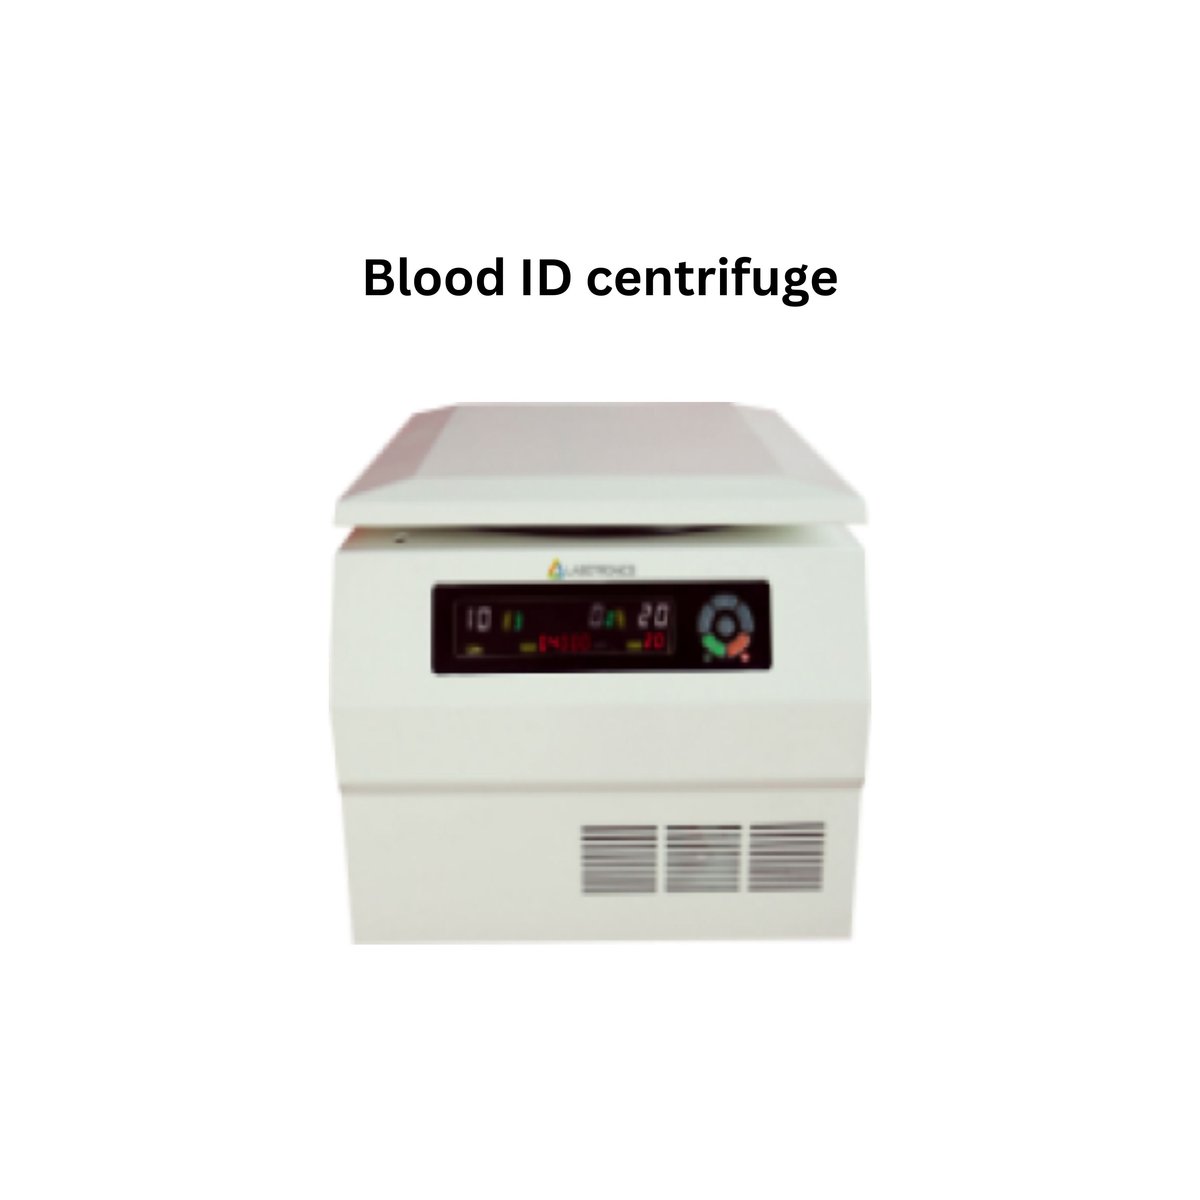 Blood ID centrifuge.jpg